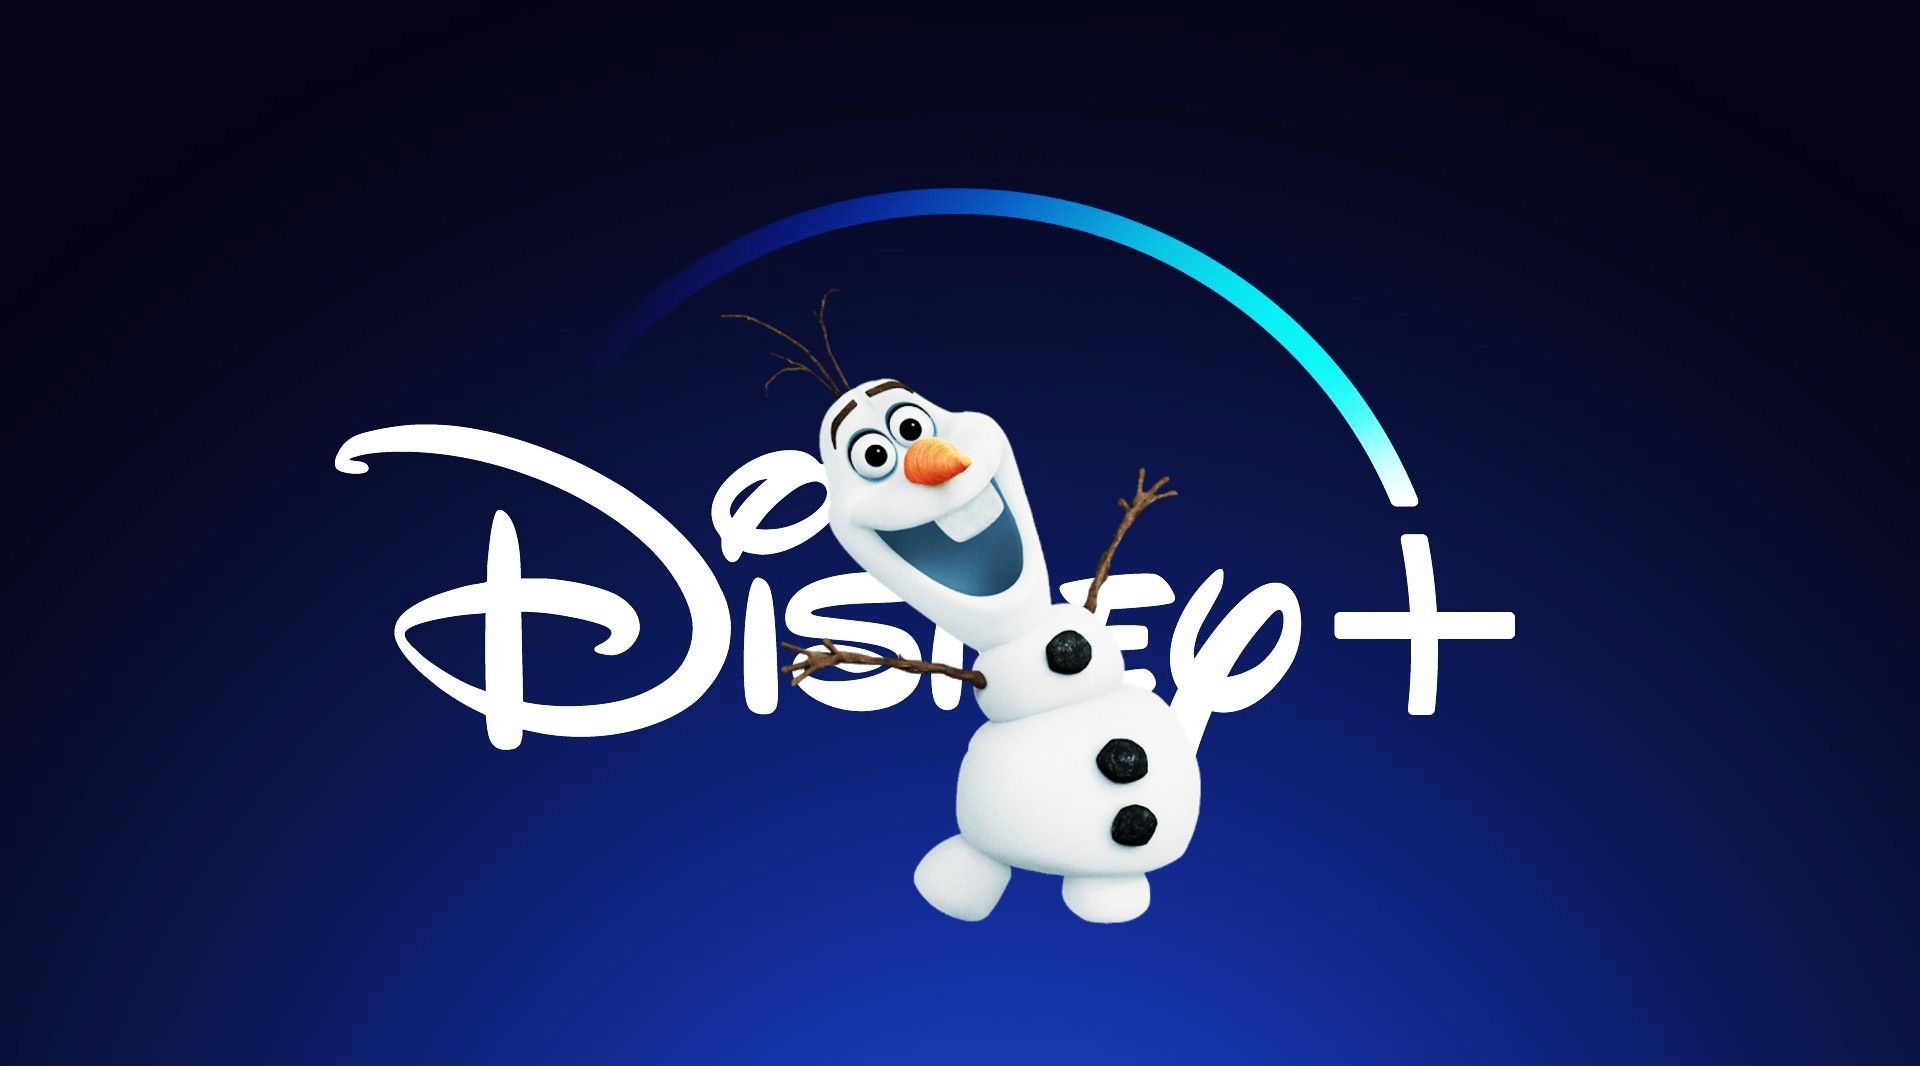 Corto animado Olaf Disney Plus